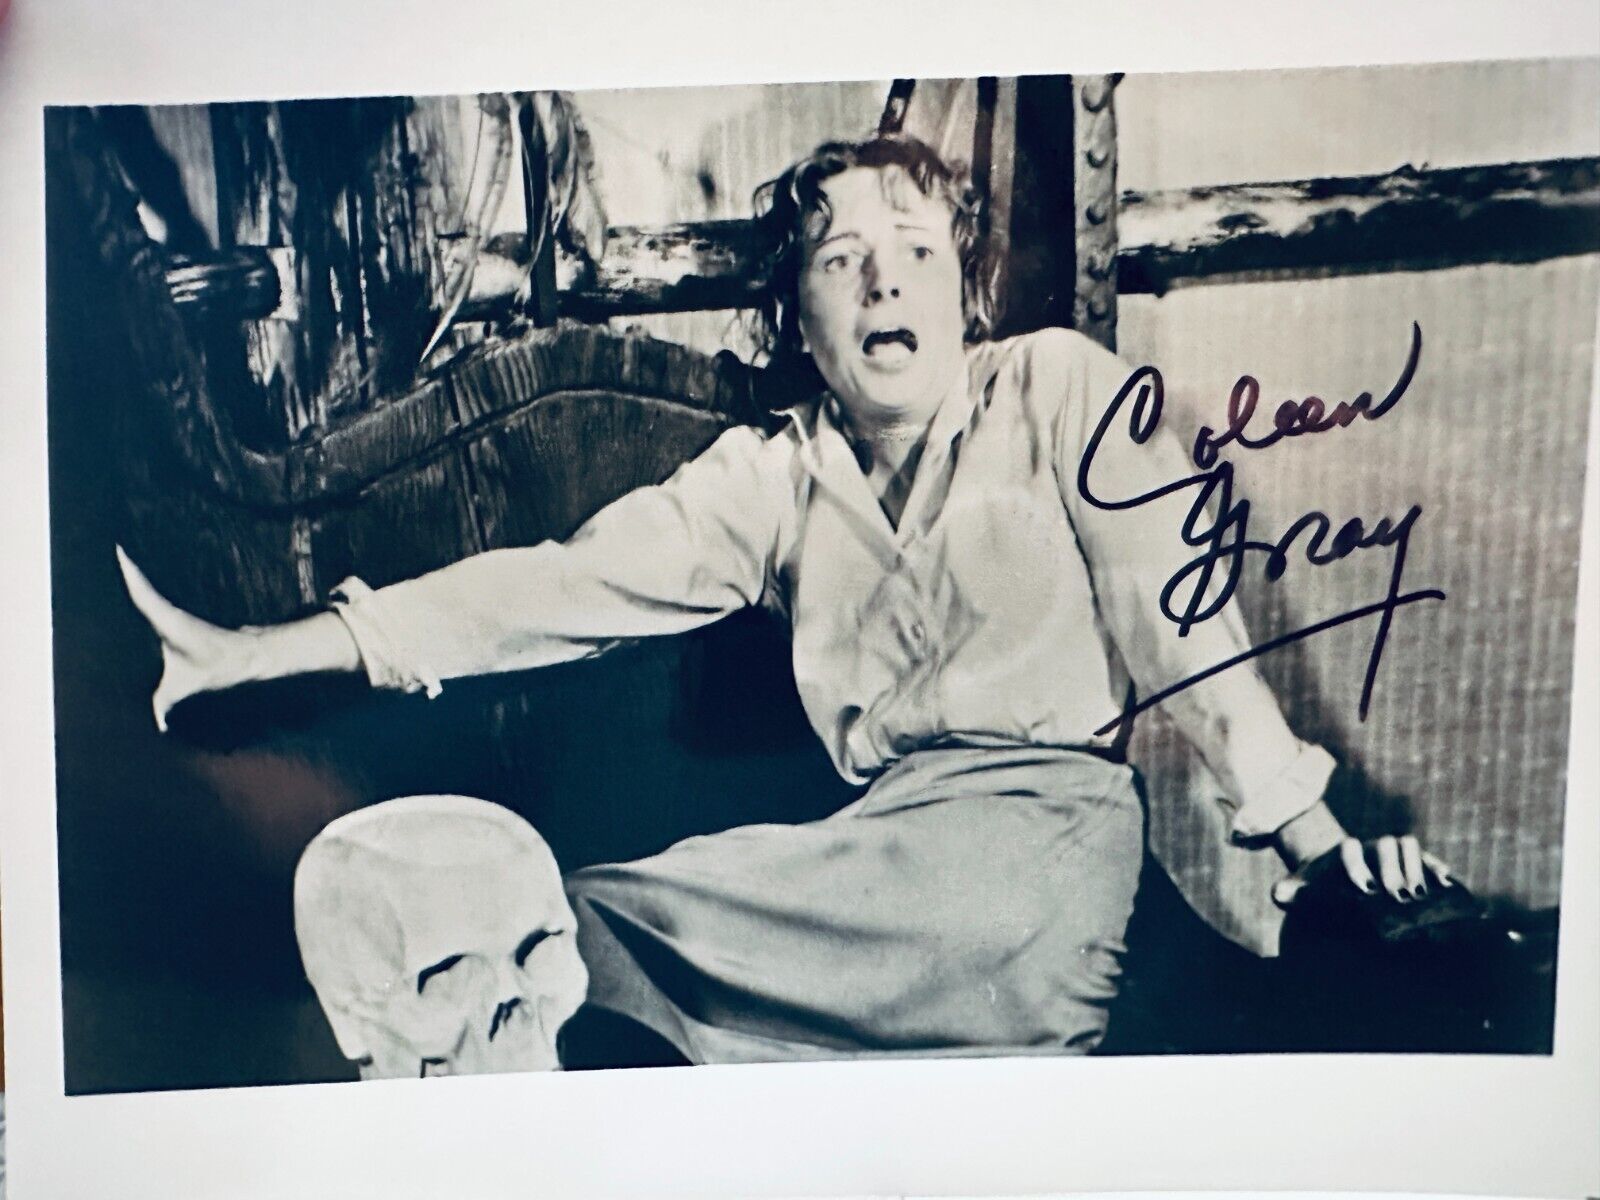 COLEEN GRAY Signed 8X10 Photo Autograph W/ COA